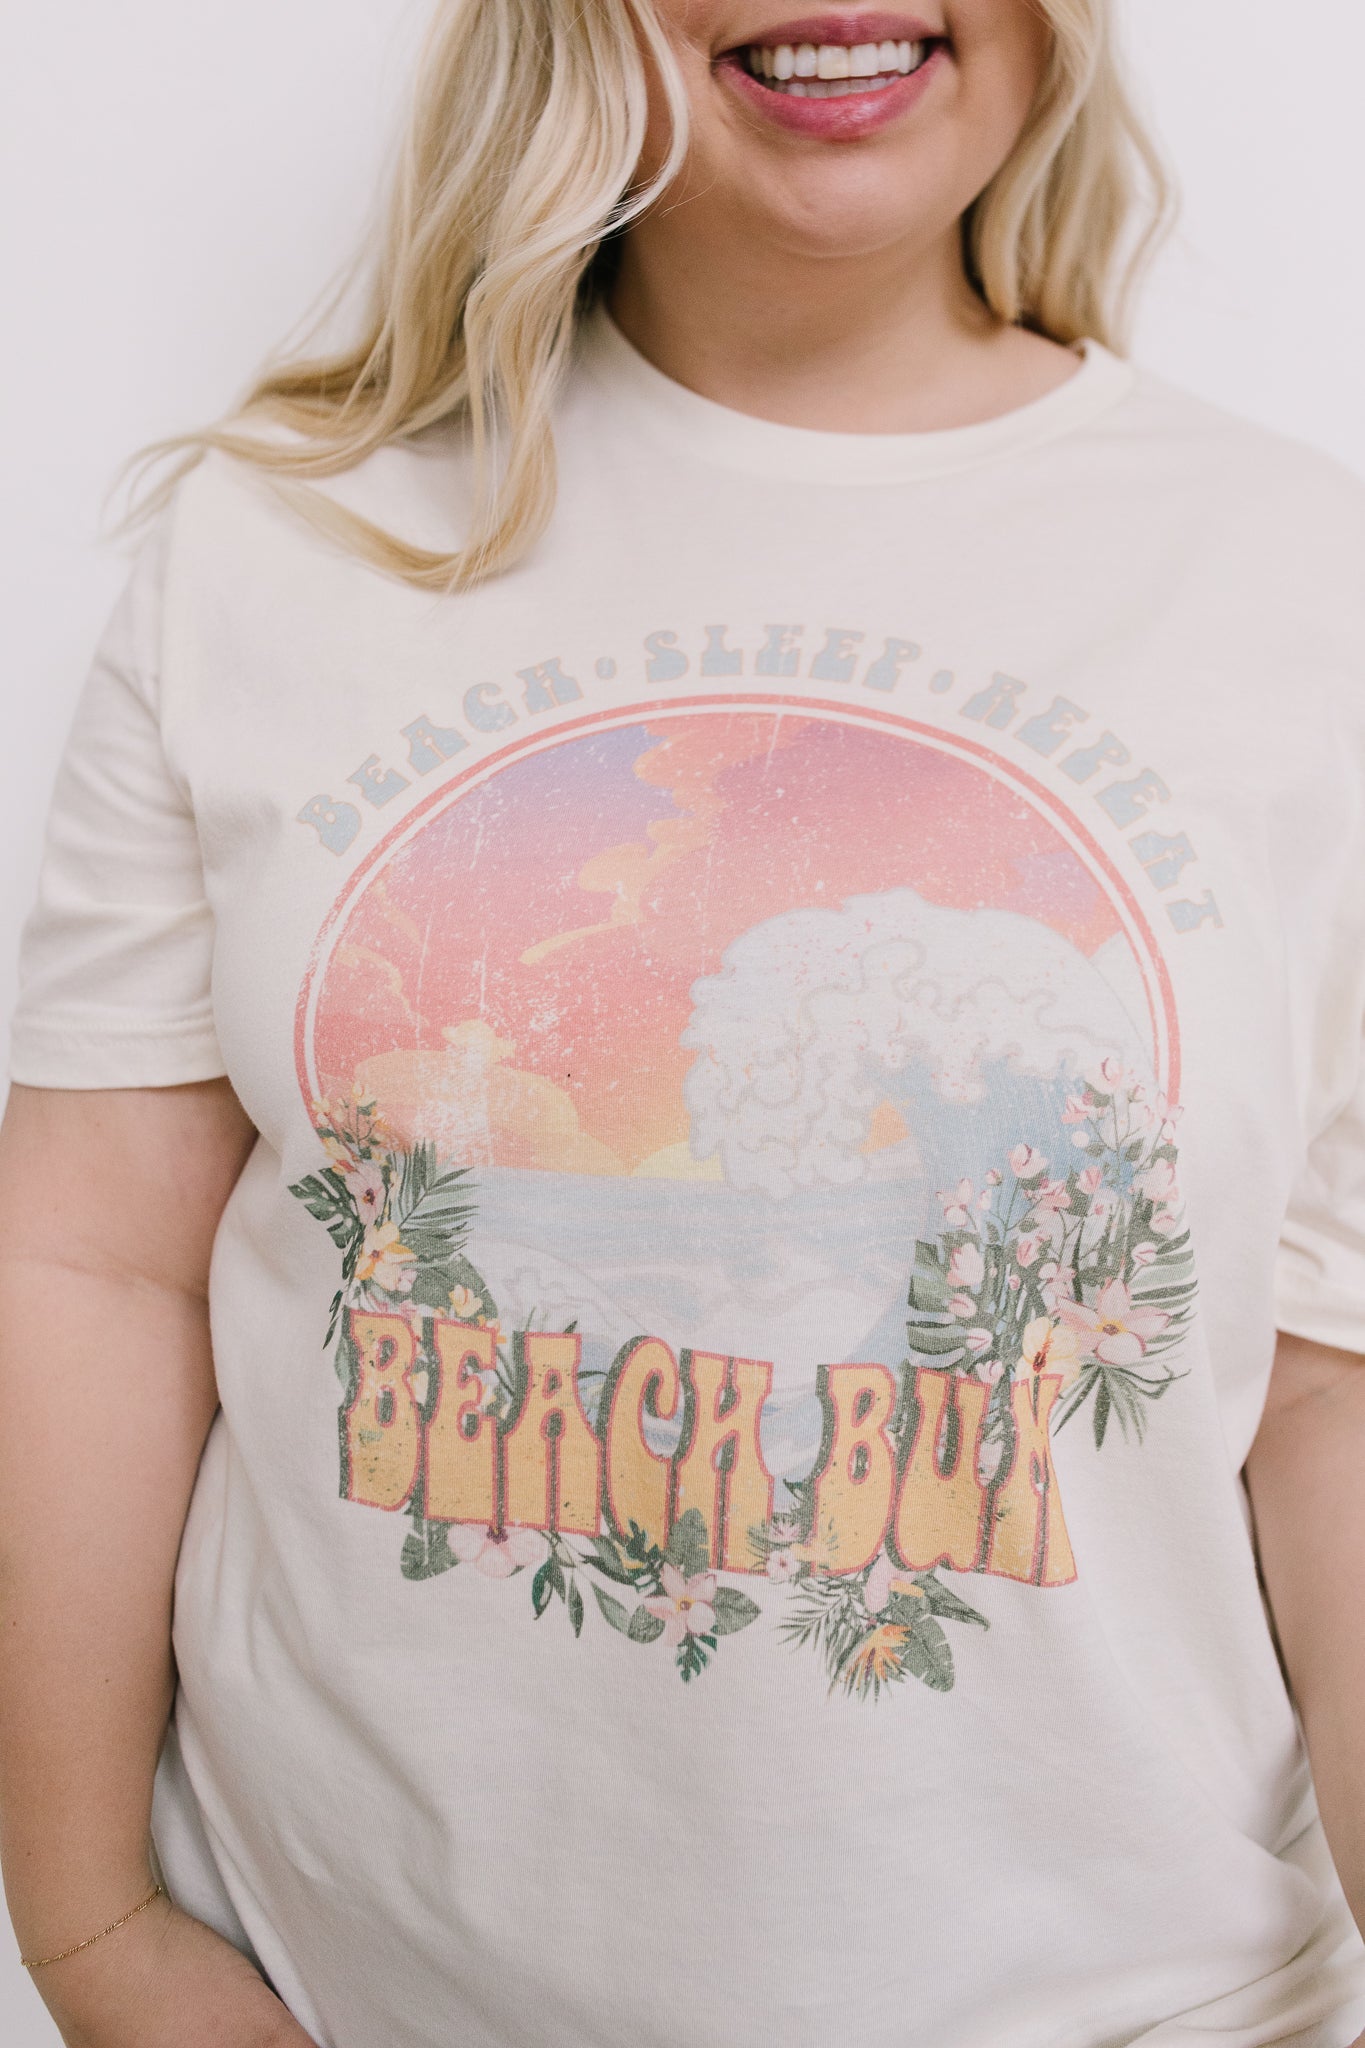 Beach, Sleep, Repeat, Beach Bum Graphic Tee